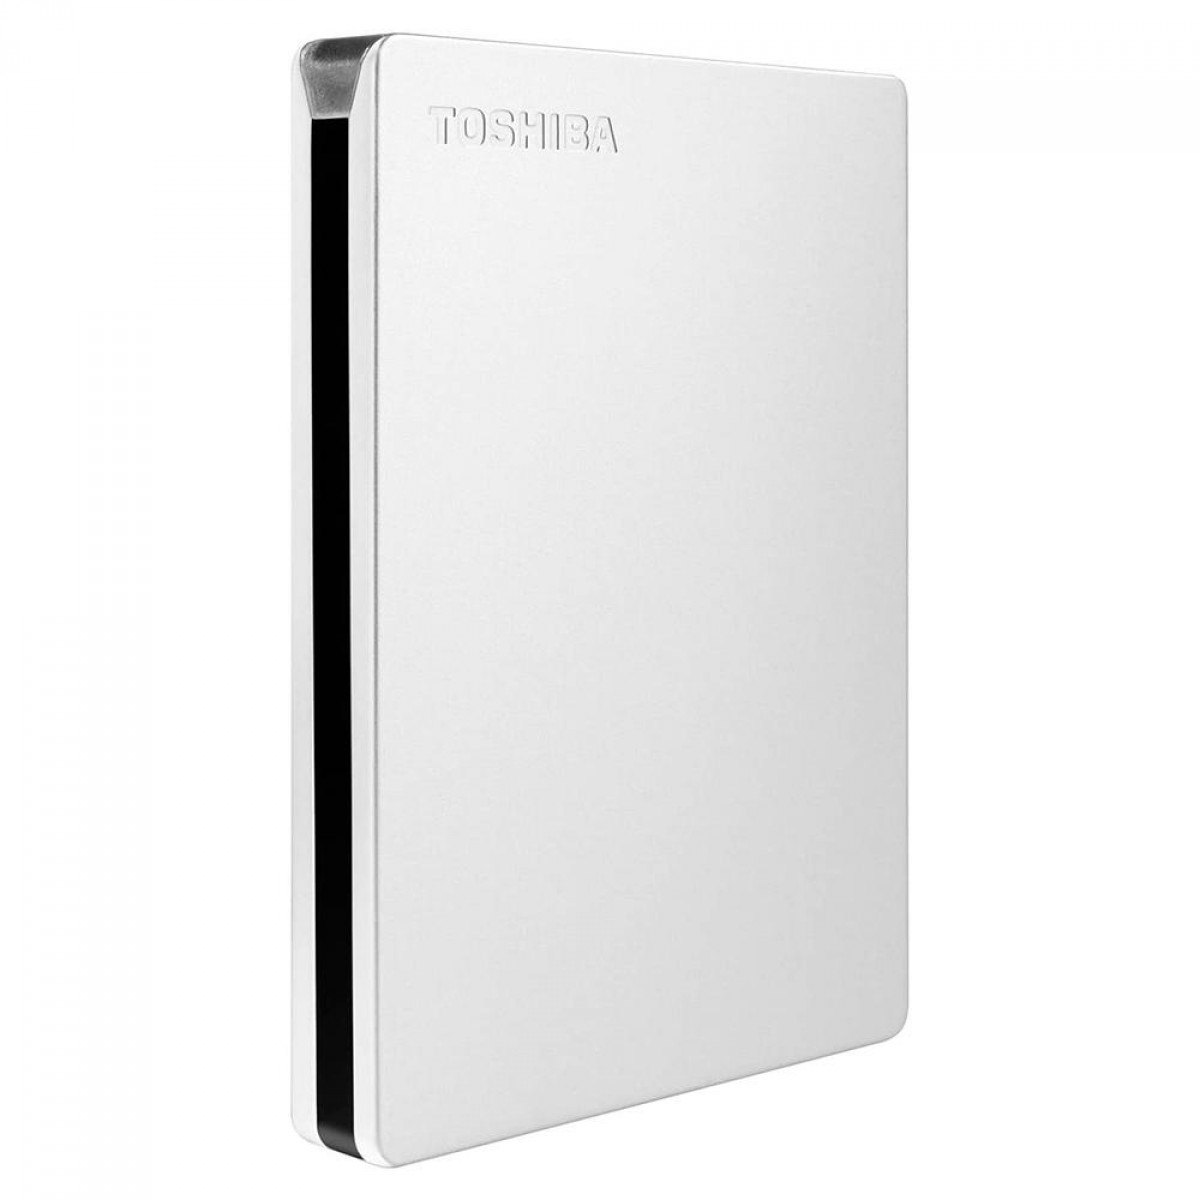 HD Externo Toshiba Canvio Slim 2TB, USB 3.0, Silver, Até 5Gb/s, HDTD320XS3EA